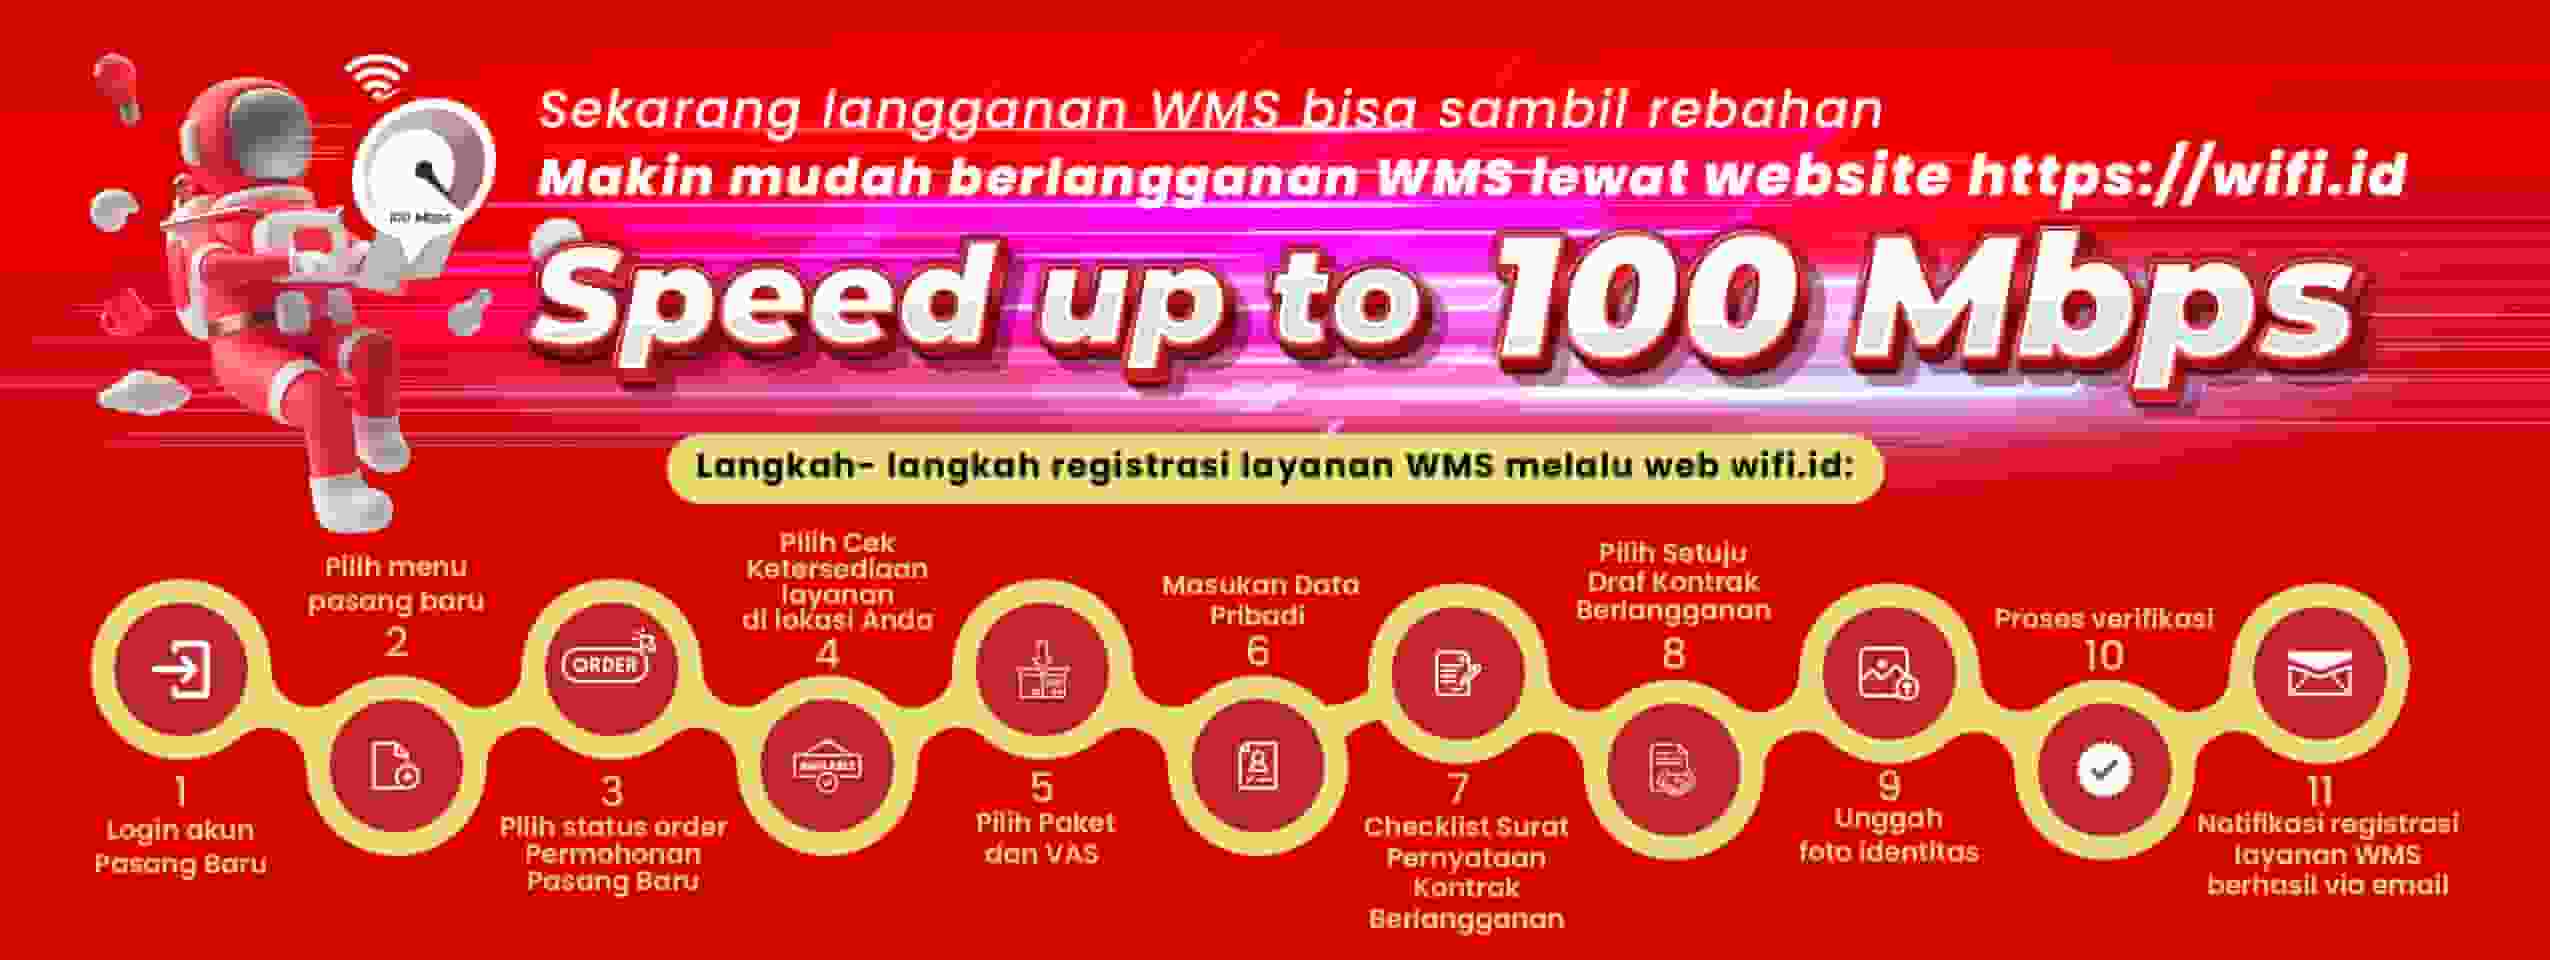 Info wifi.id